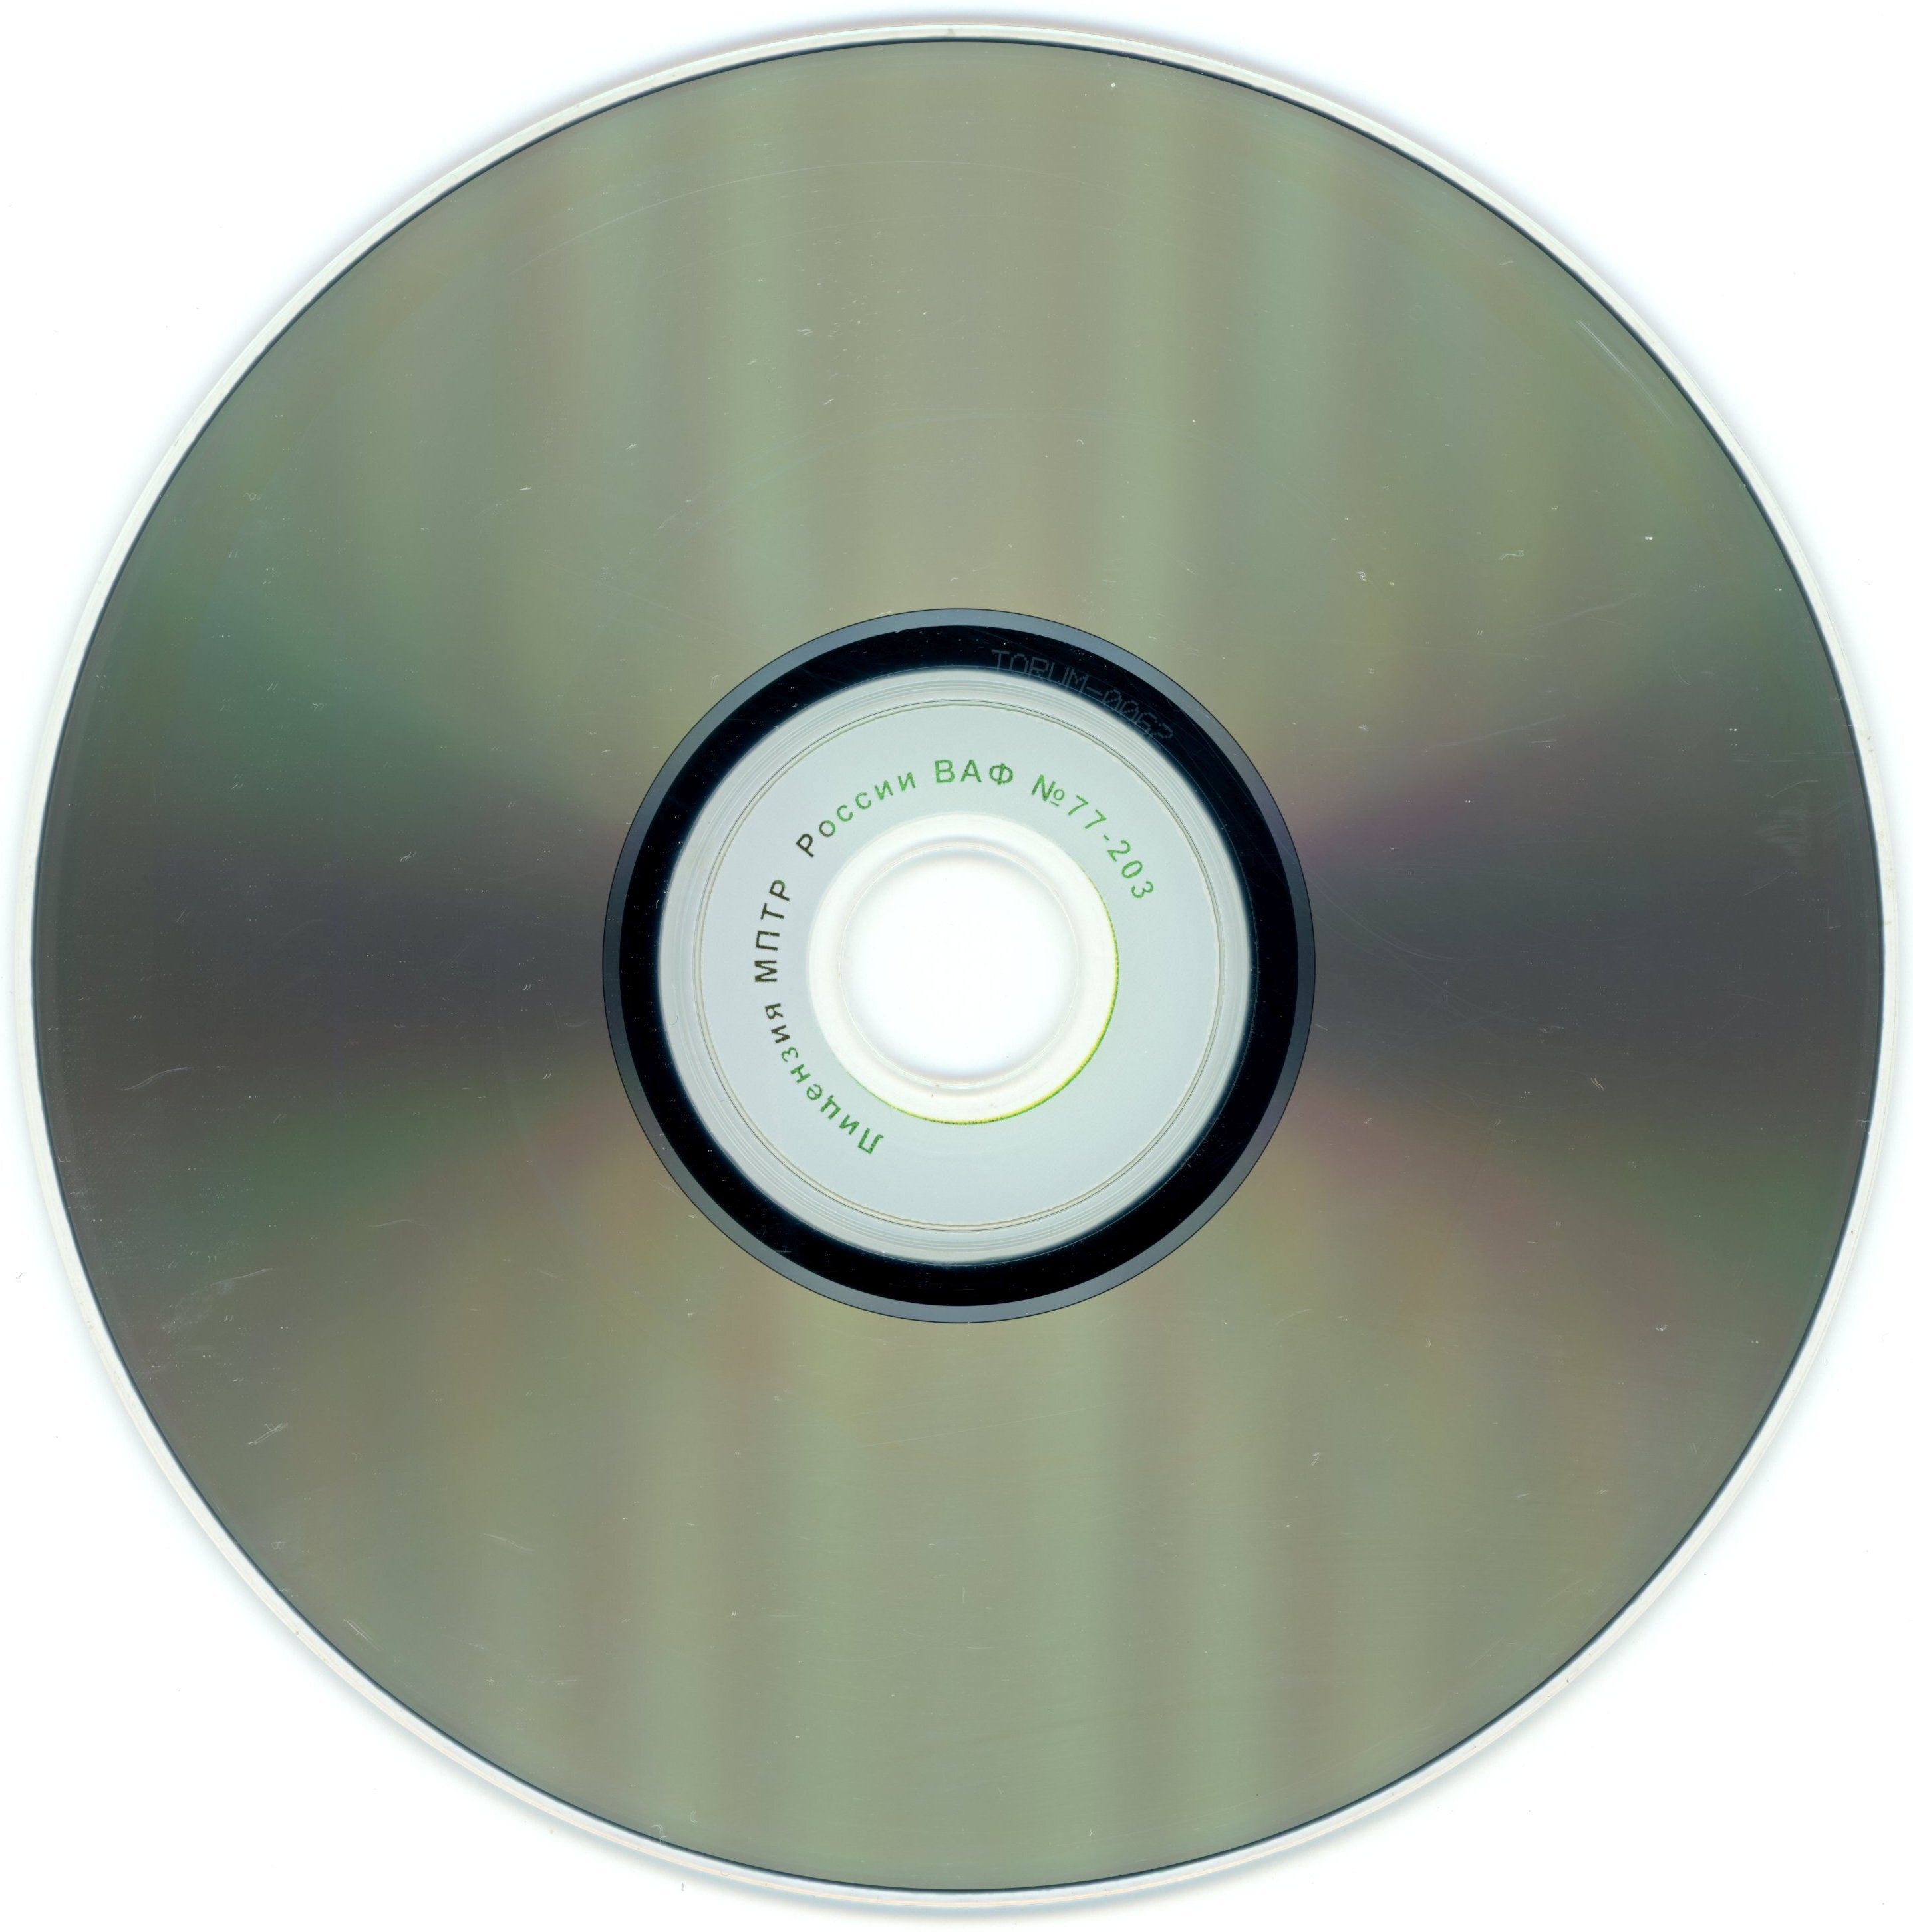 Cd pictures. Compact Disc Digital Audio. Компакт-диск Lucifer II. CD мастер: VIII. CD диск Midnight Ballads.